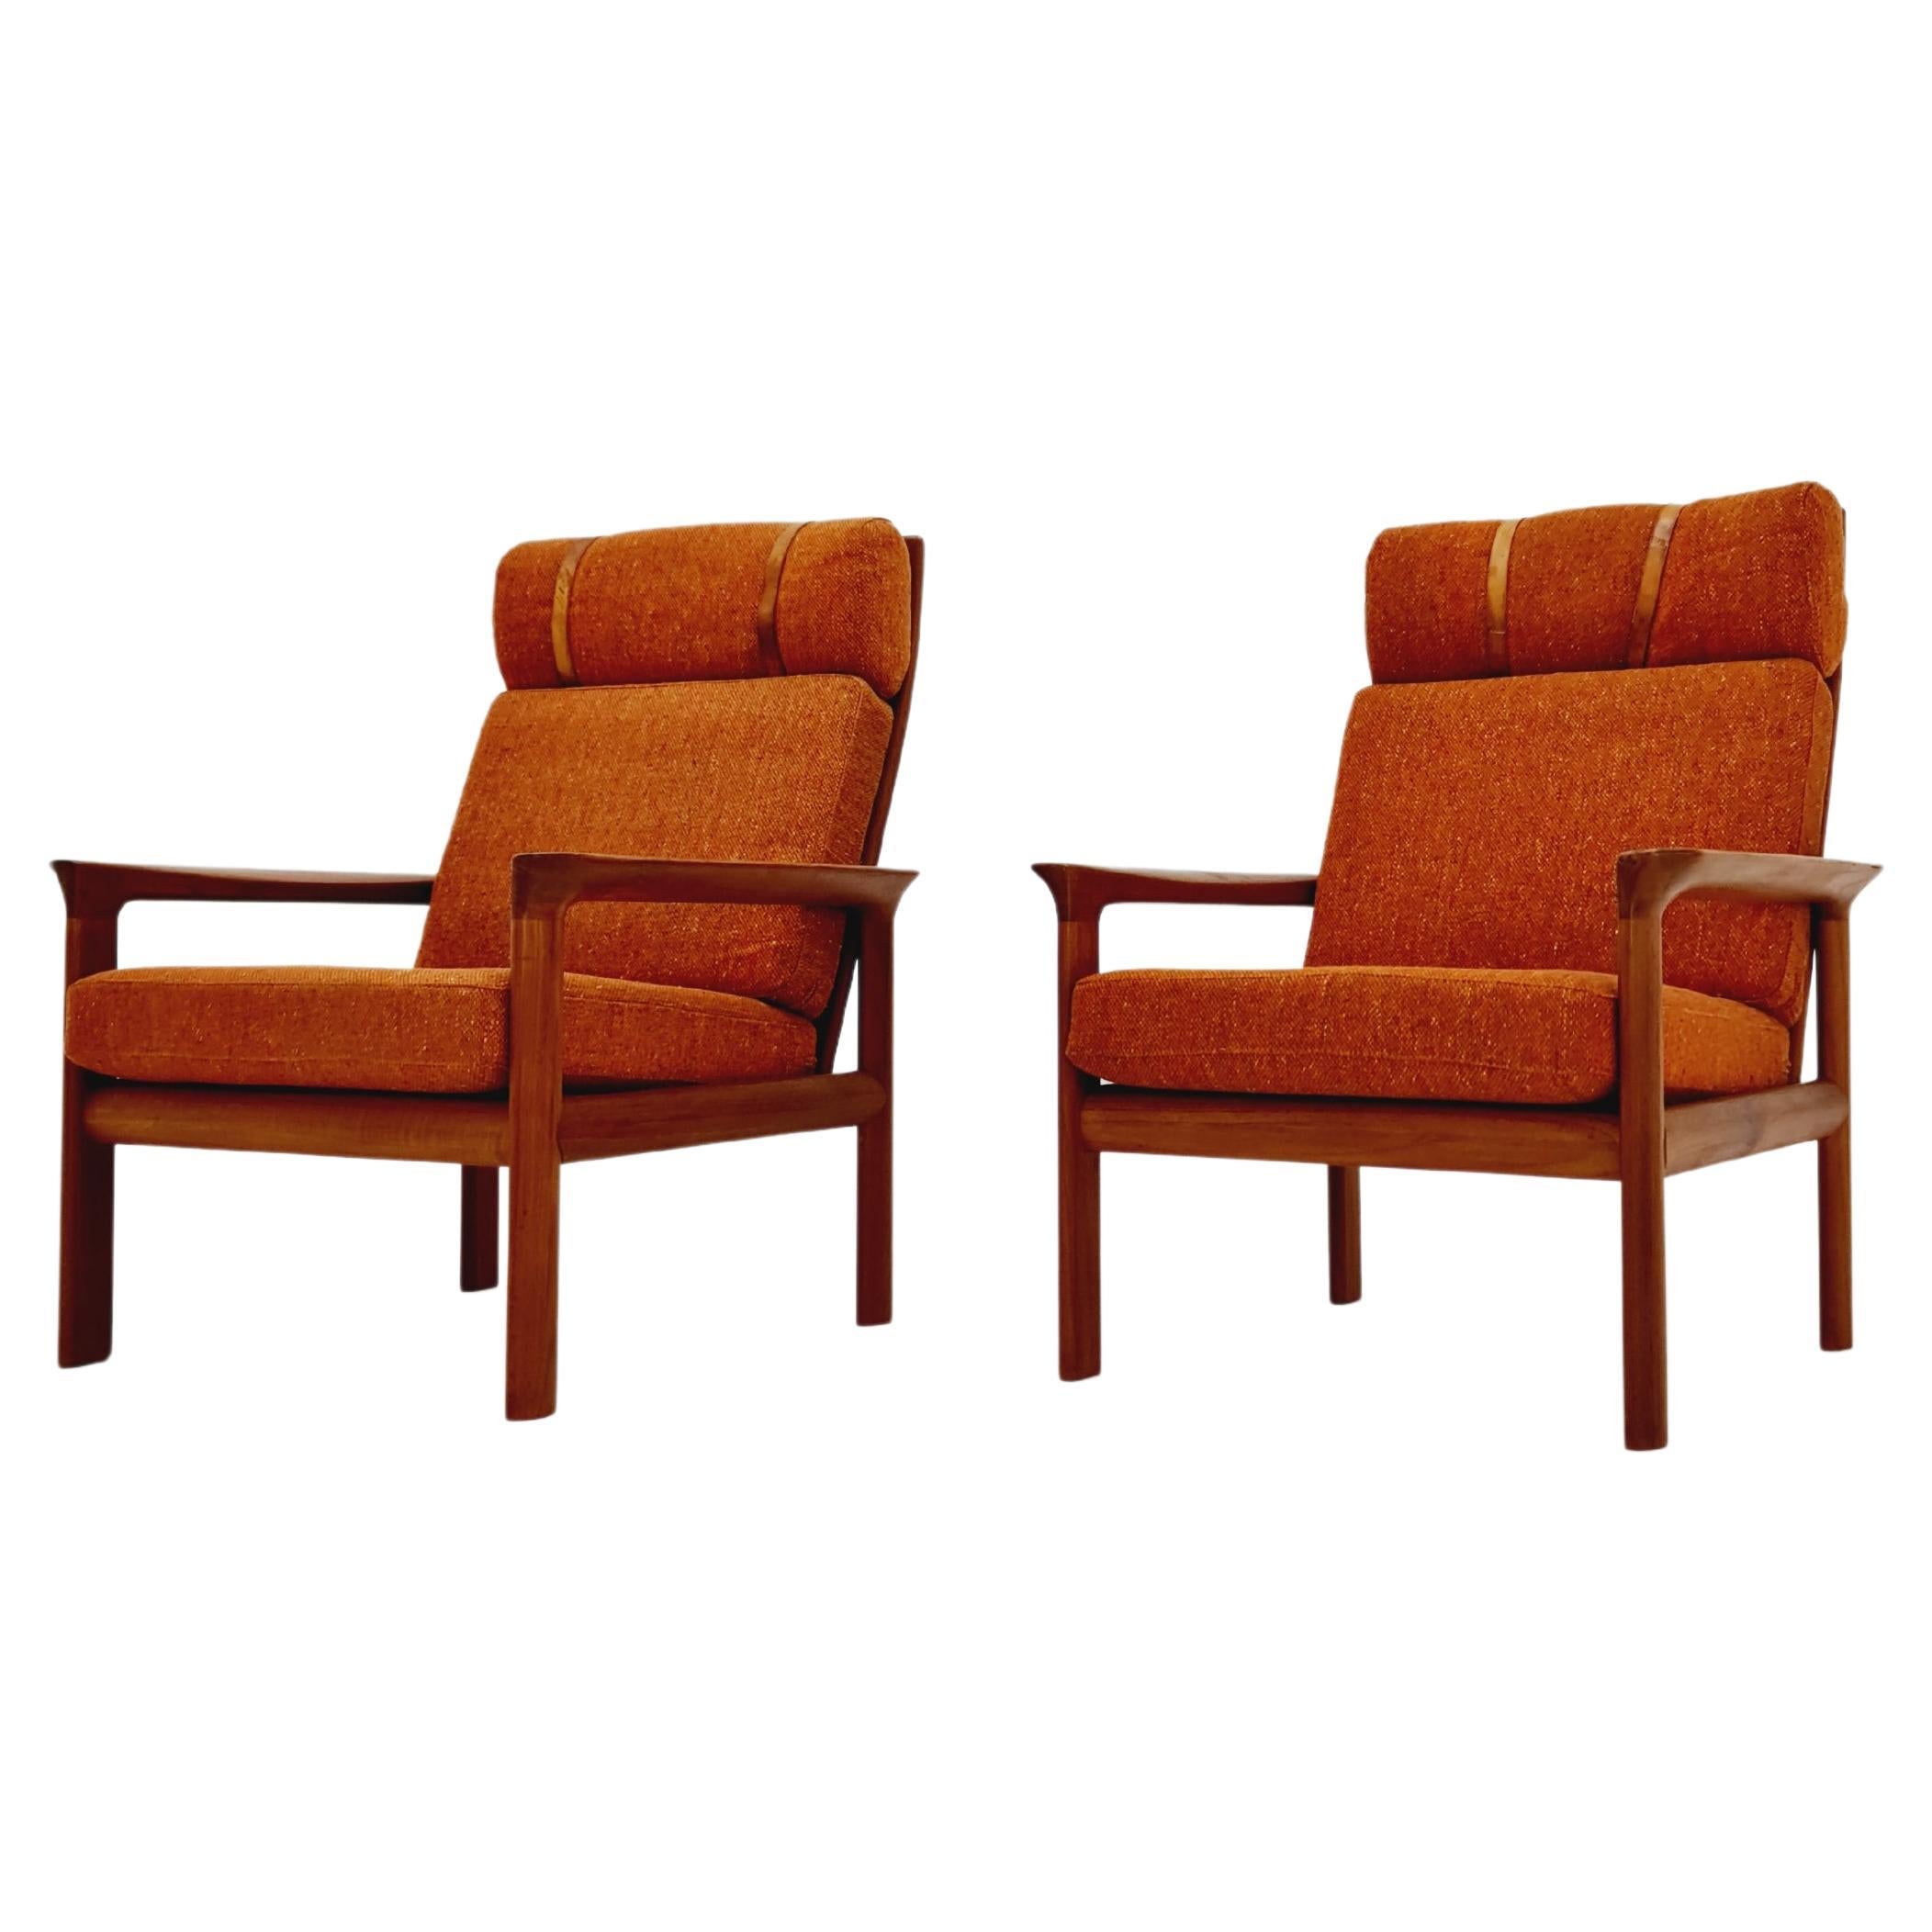 Mid century teak easy lounge high back chairs by Sven Ellekaer for Komfort 